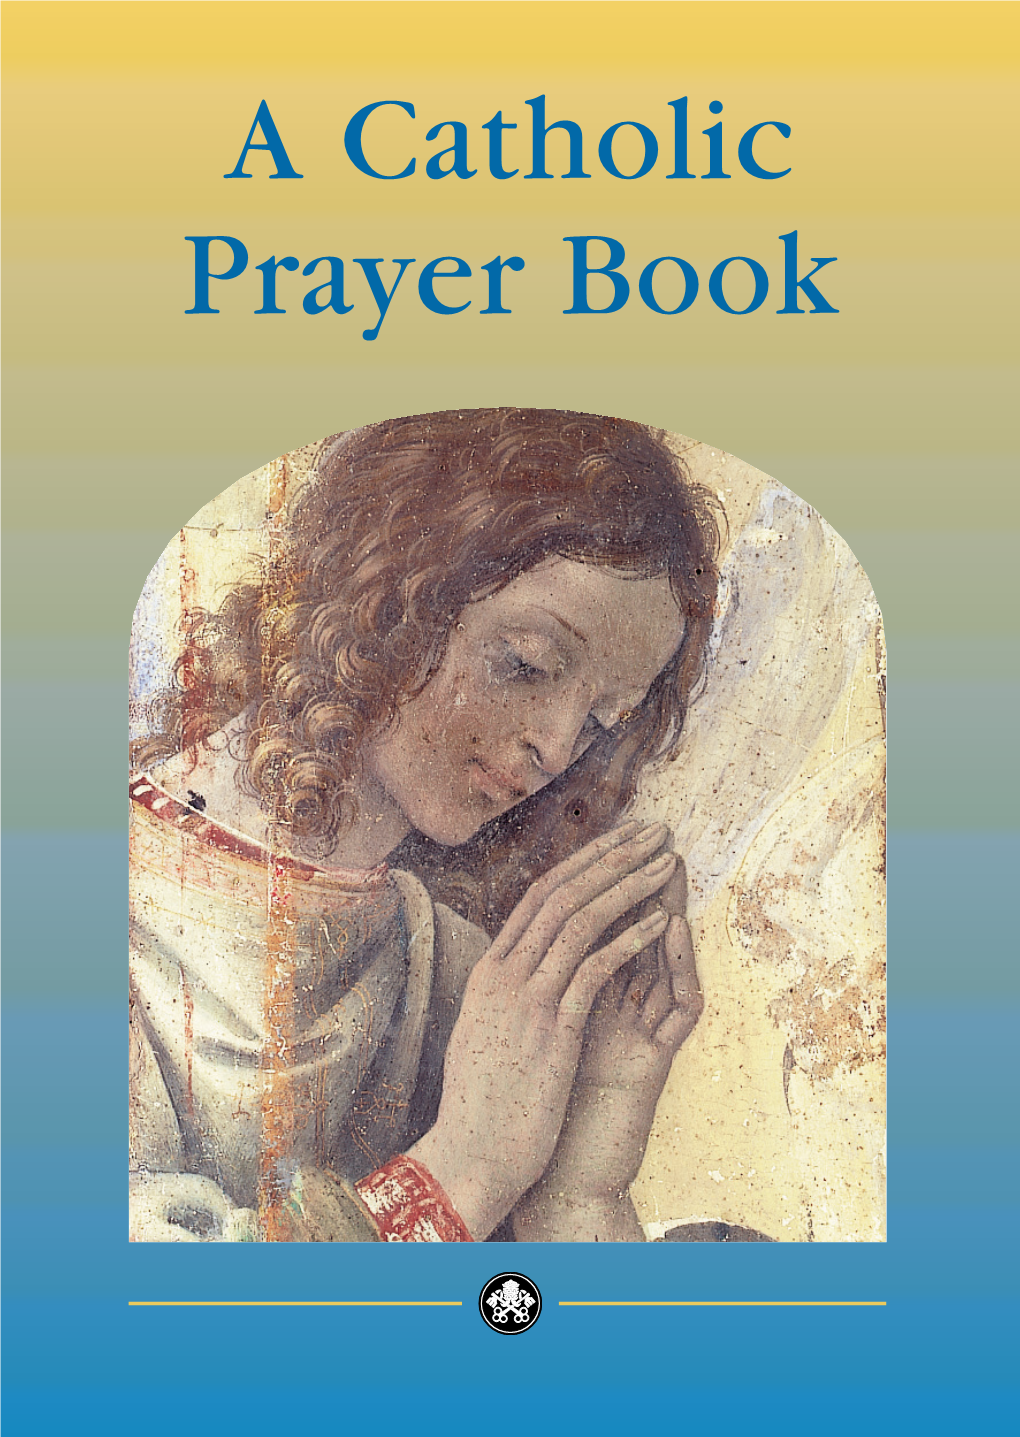 A Catholic Prayer Book 3/16/10 2:15 PM Page 3